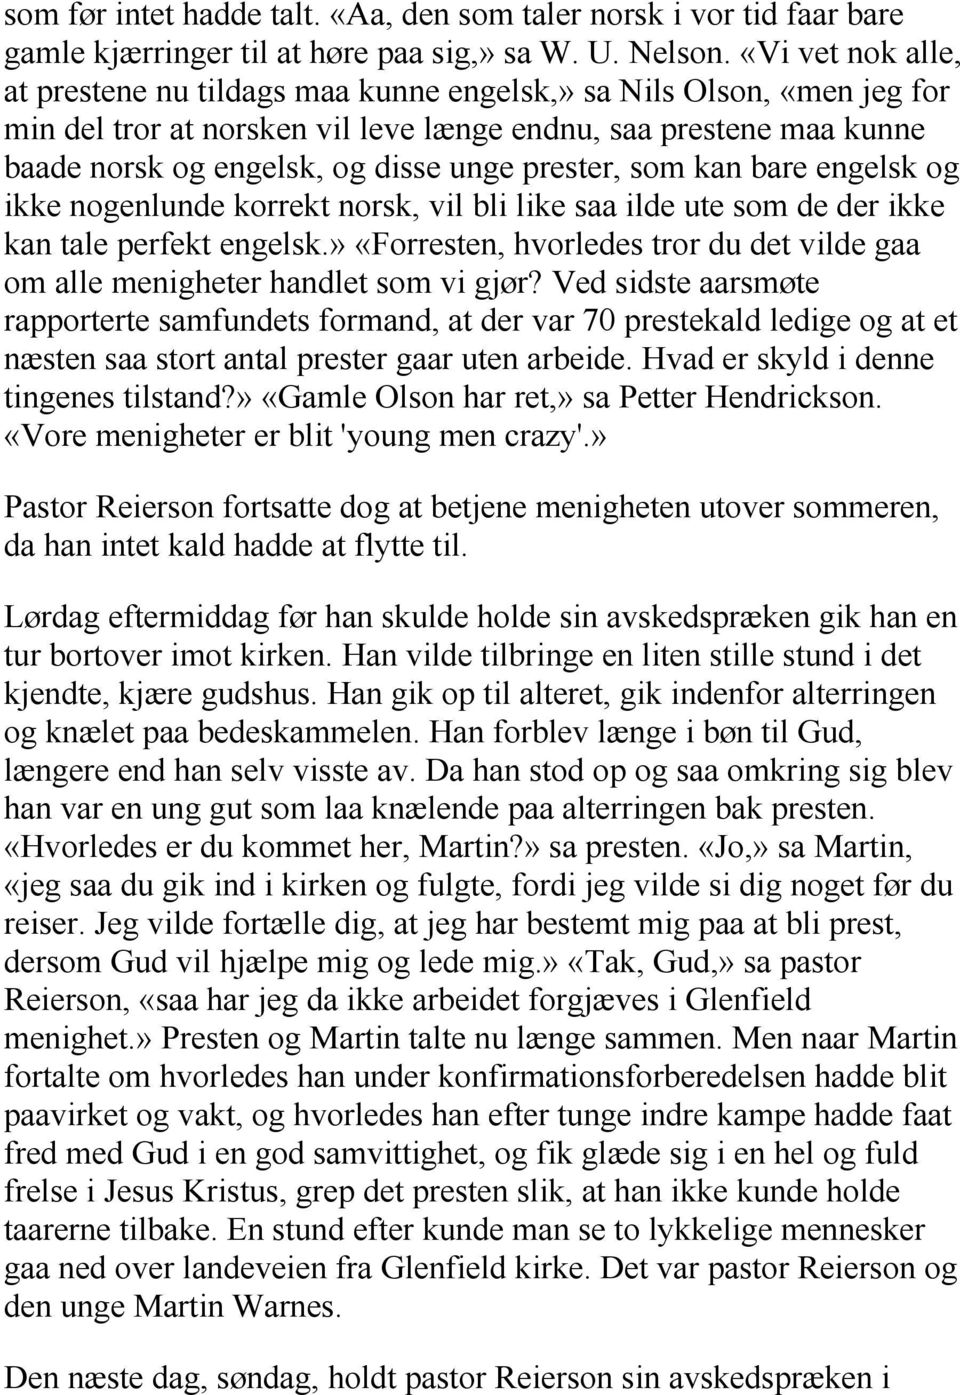 prester, som kan bare engelsk og ikke nogenlunde korrekt norsk, vil bli like saa ilde ute som de der ikke kan tale perfekt engelsk.